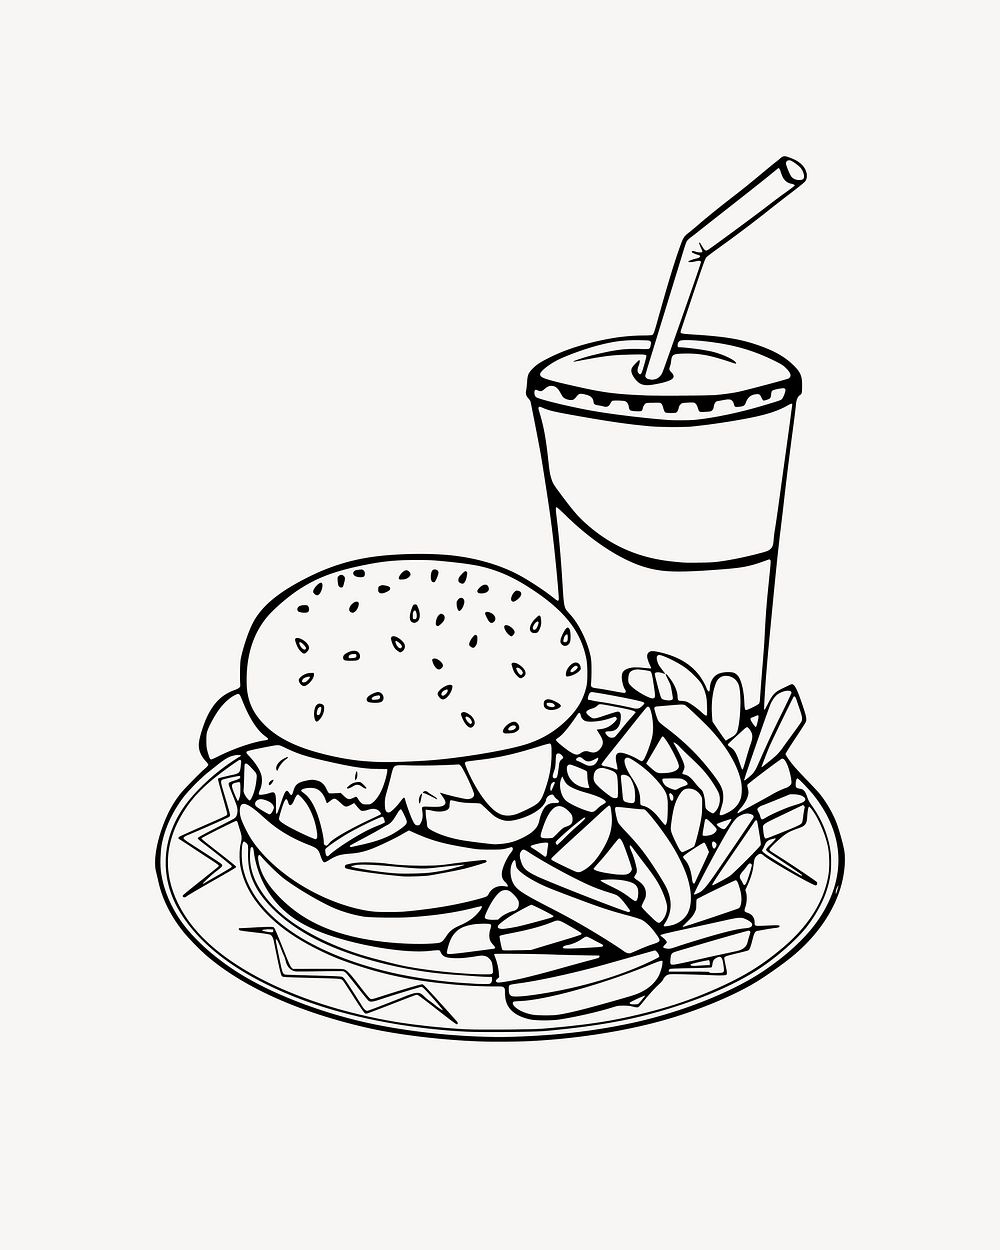 Fast food illustration, clip art. Free public domain CC0 image.